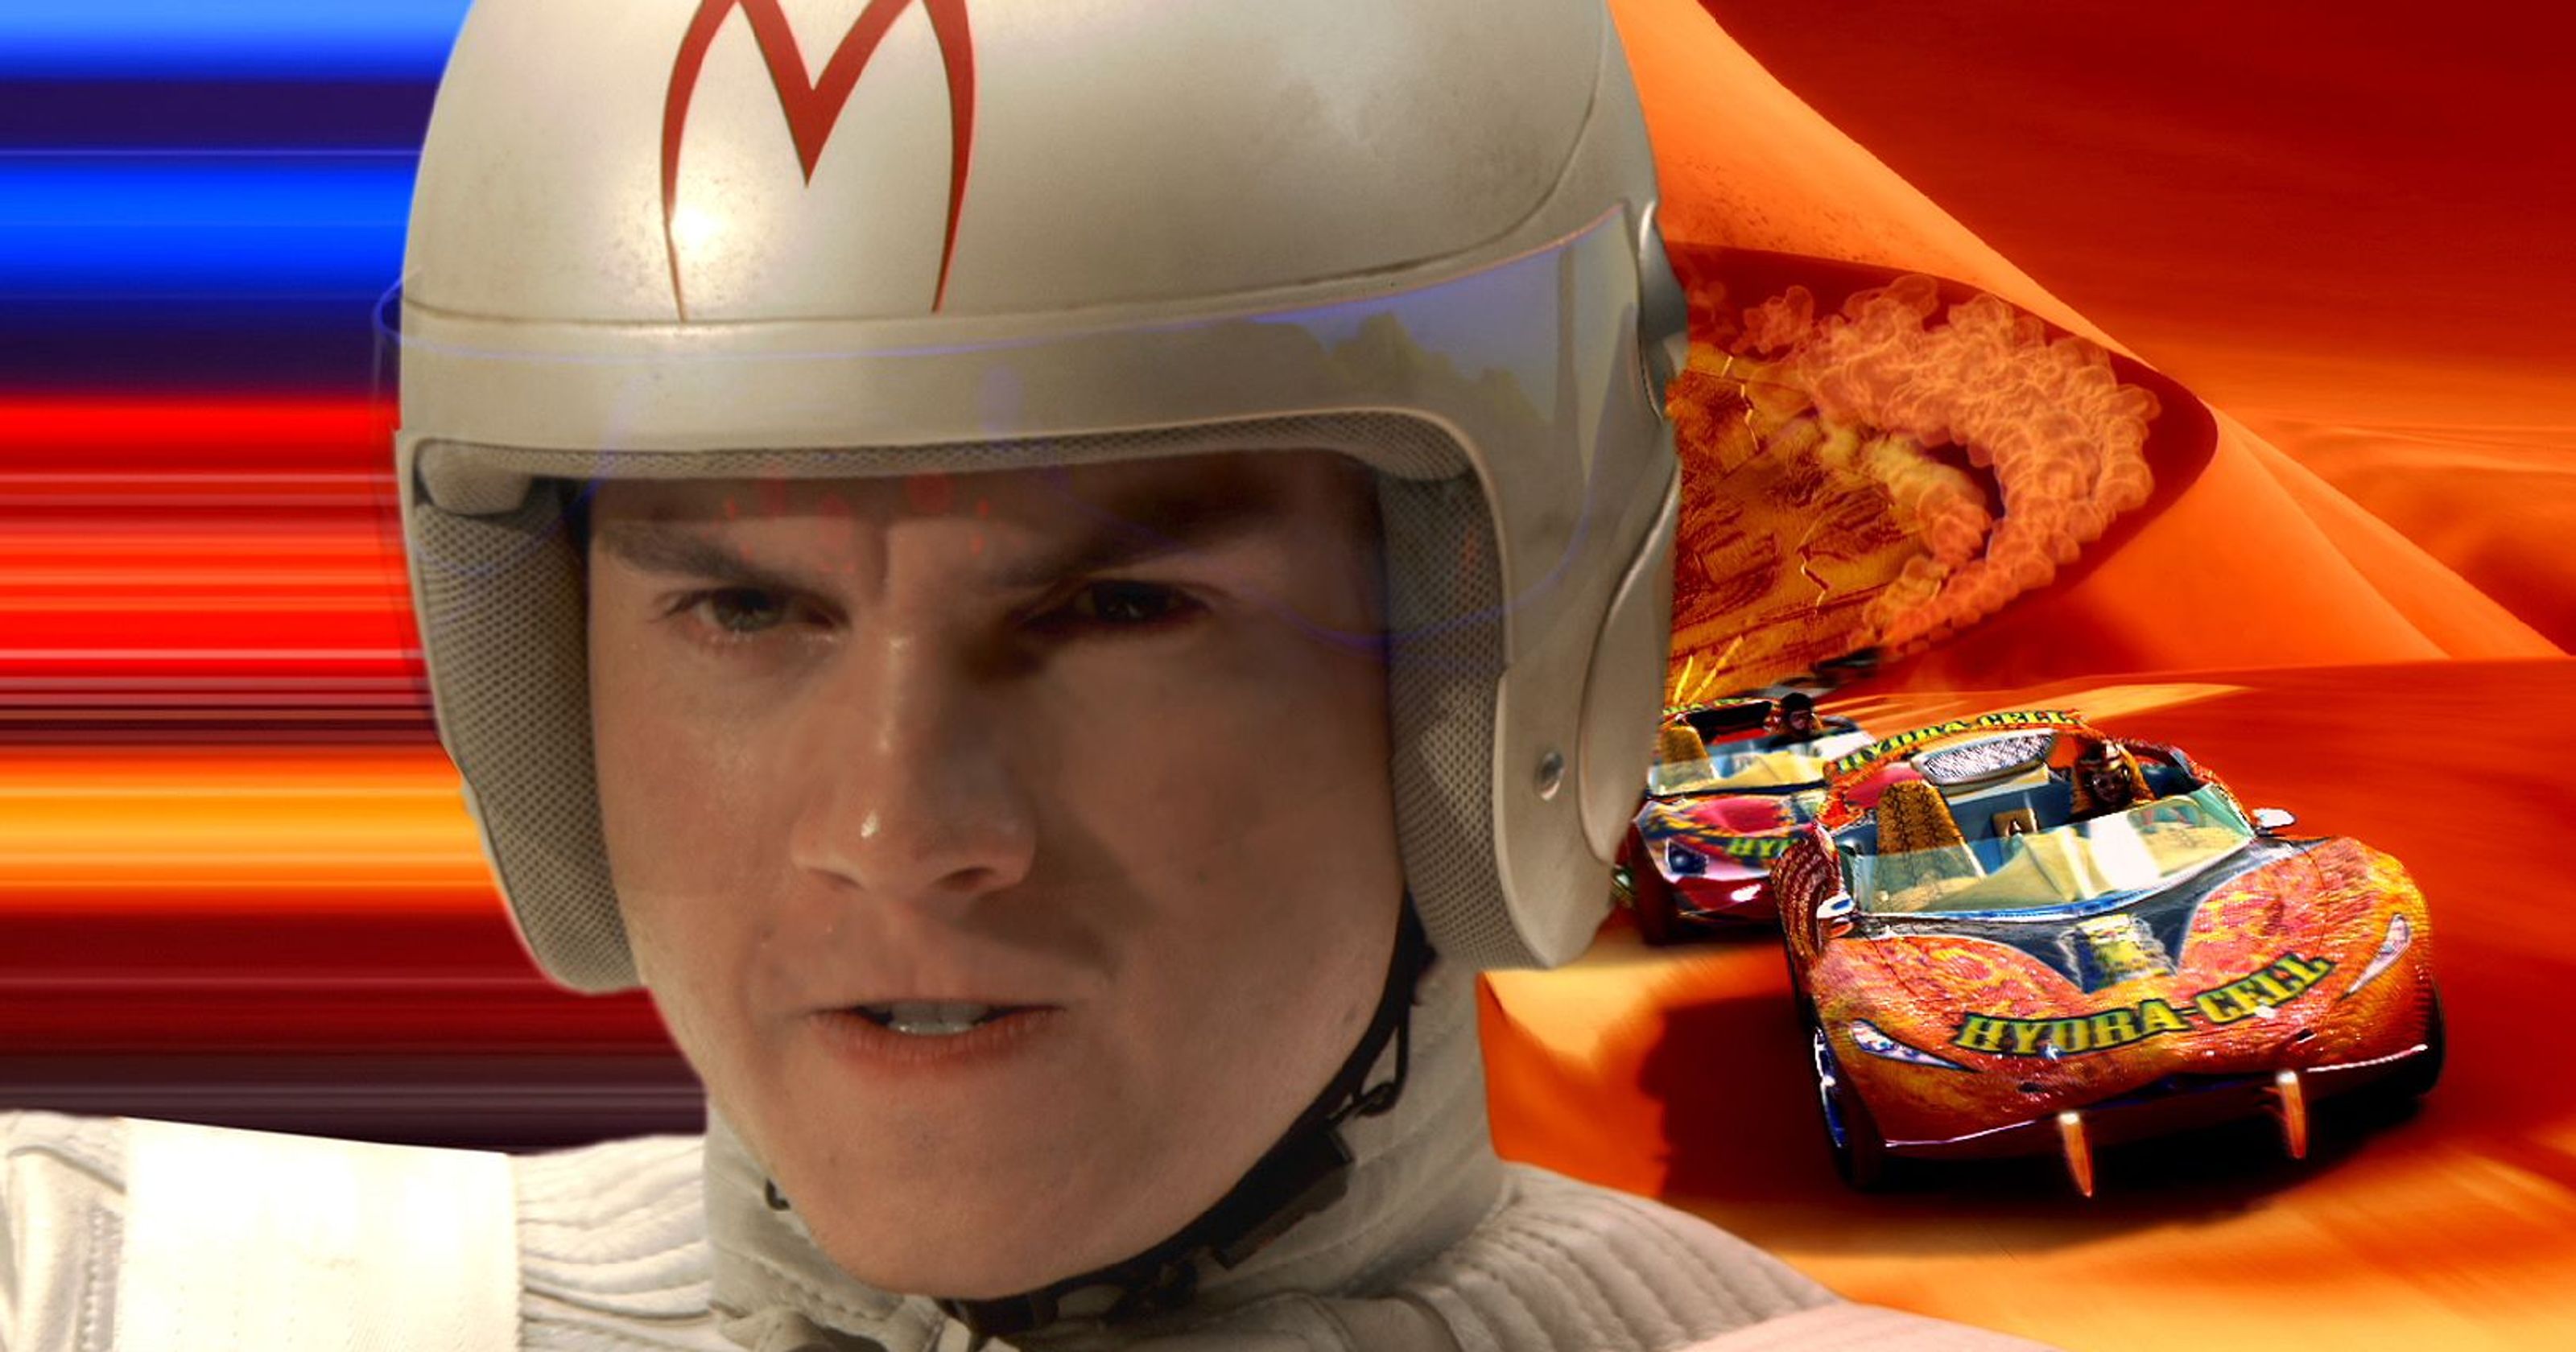 Anime Bargain Bin Reviews- Speed Racer aka Mach GoGoGo